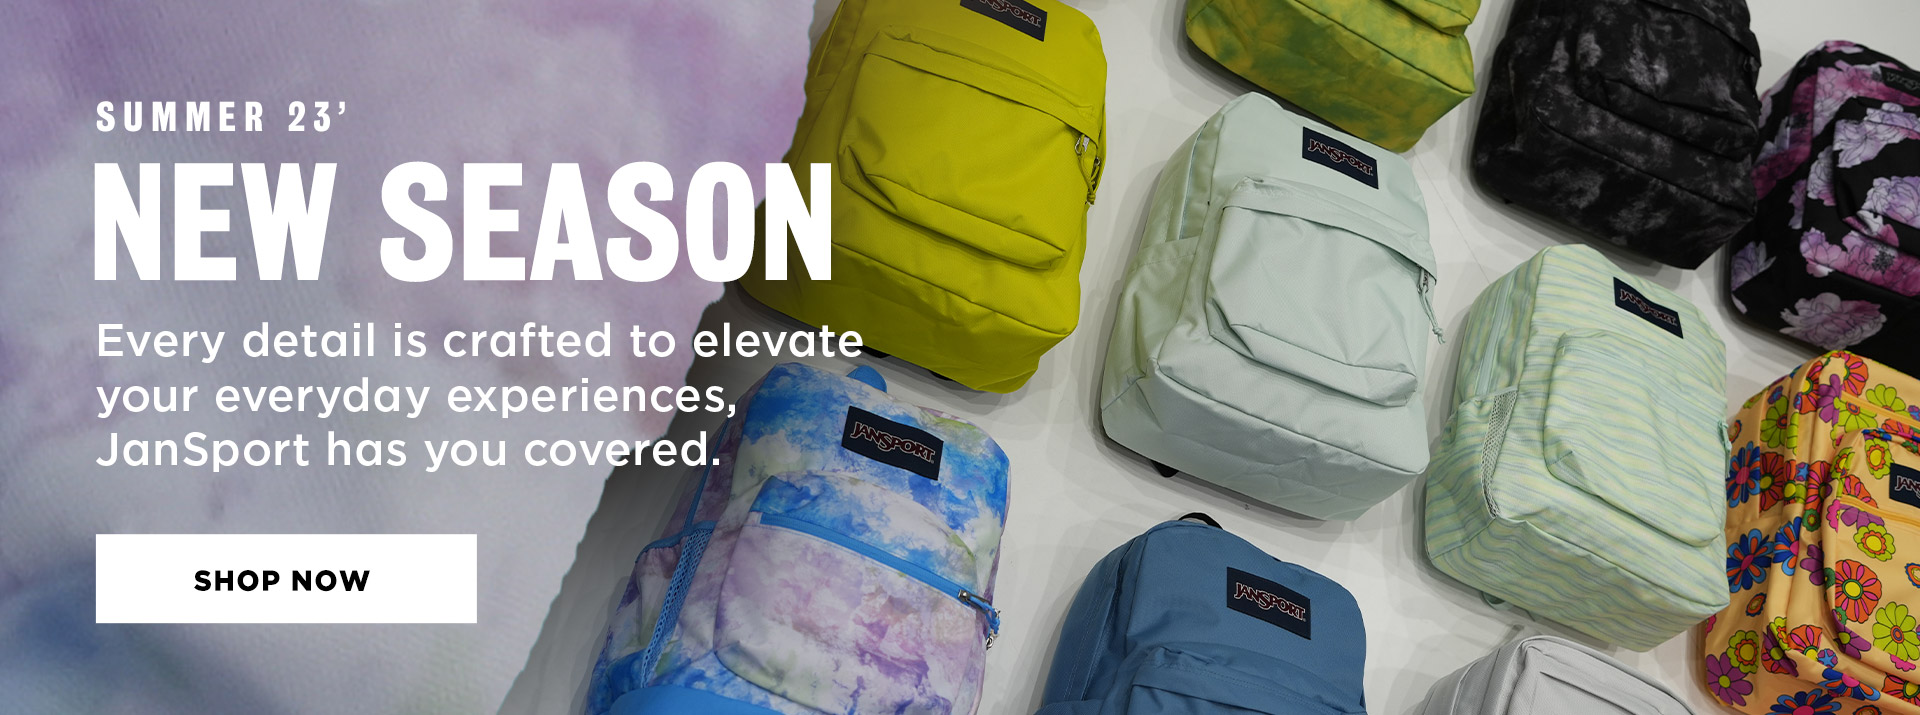 TSD Sling Bag, olive Green, Multi-Color Four Season Bag, with dust bag |  Sling bag, Fun bags, Bags